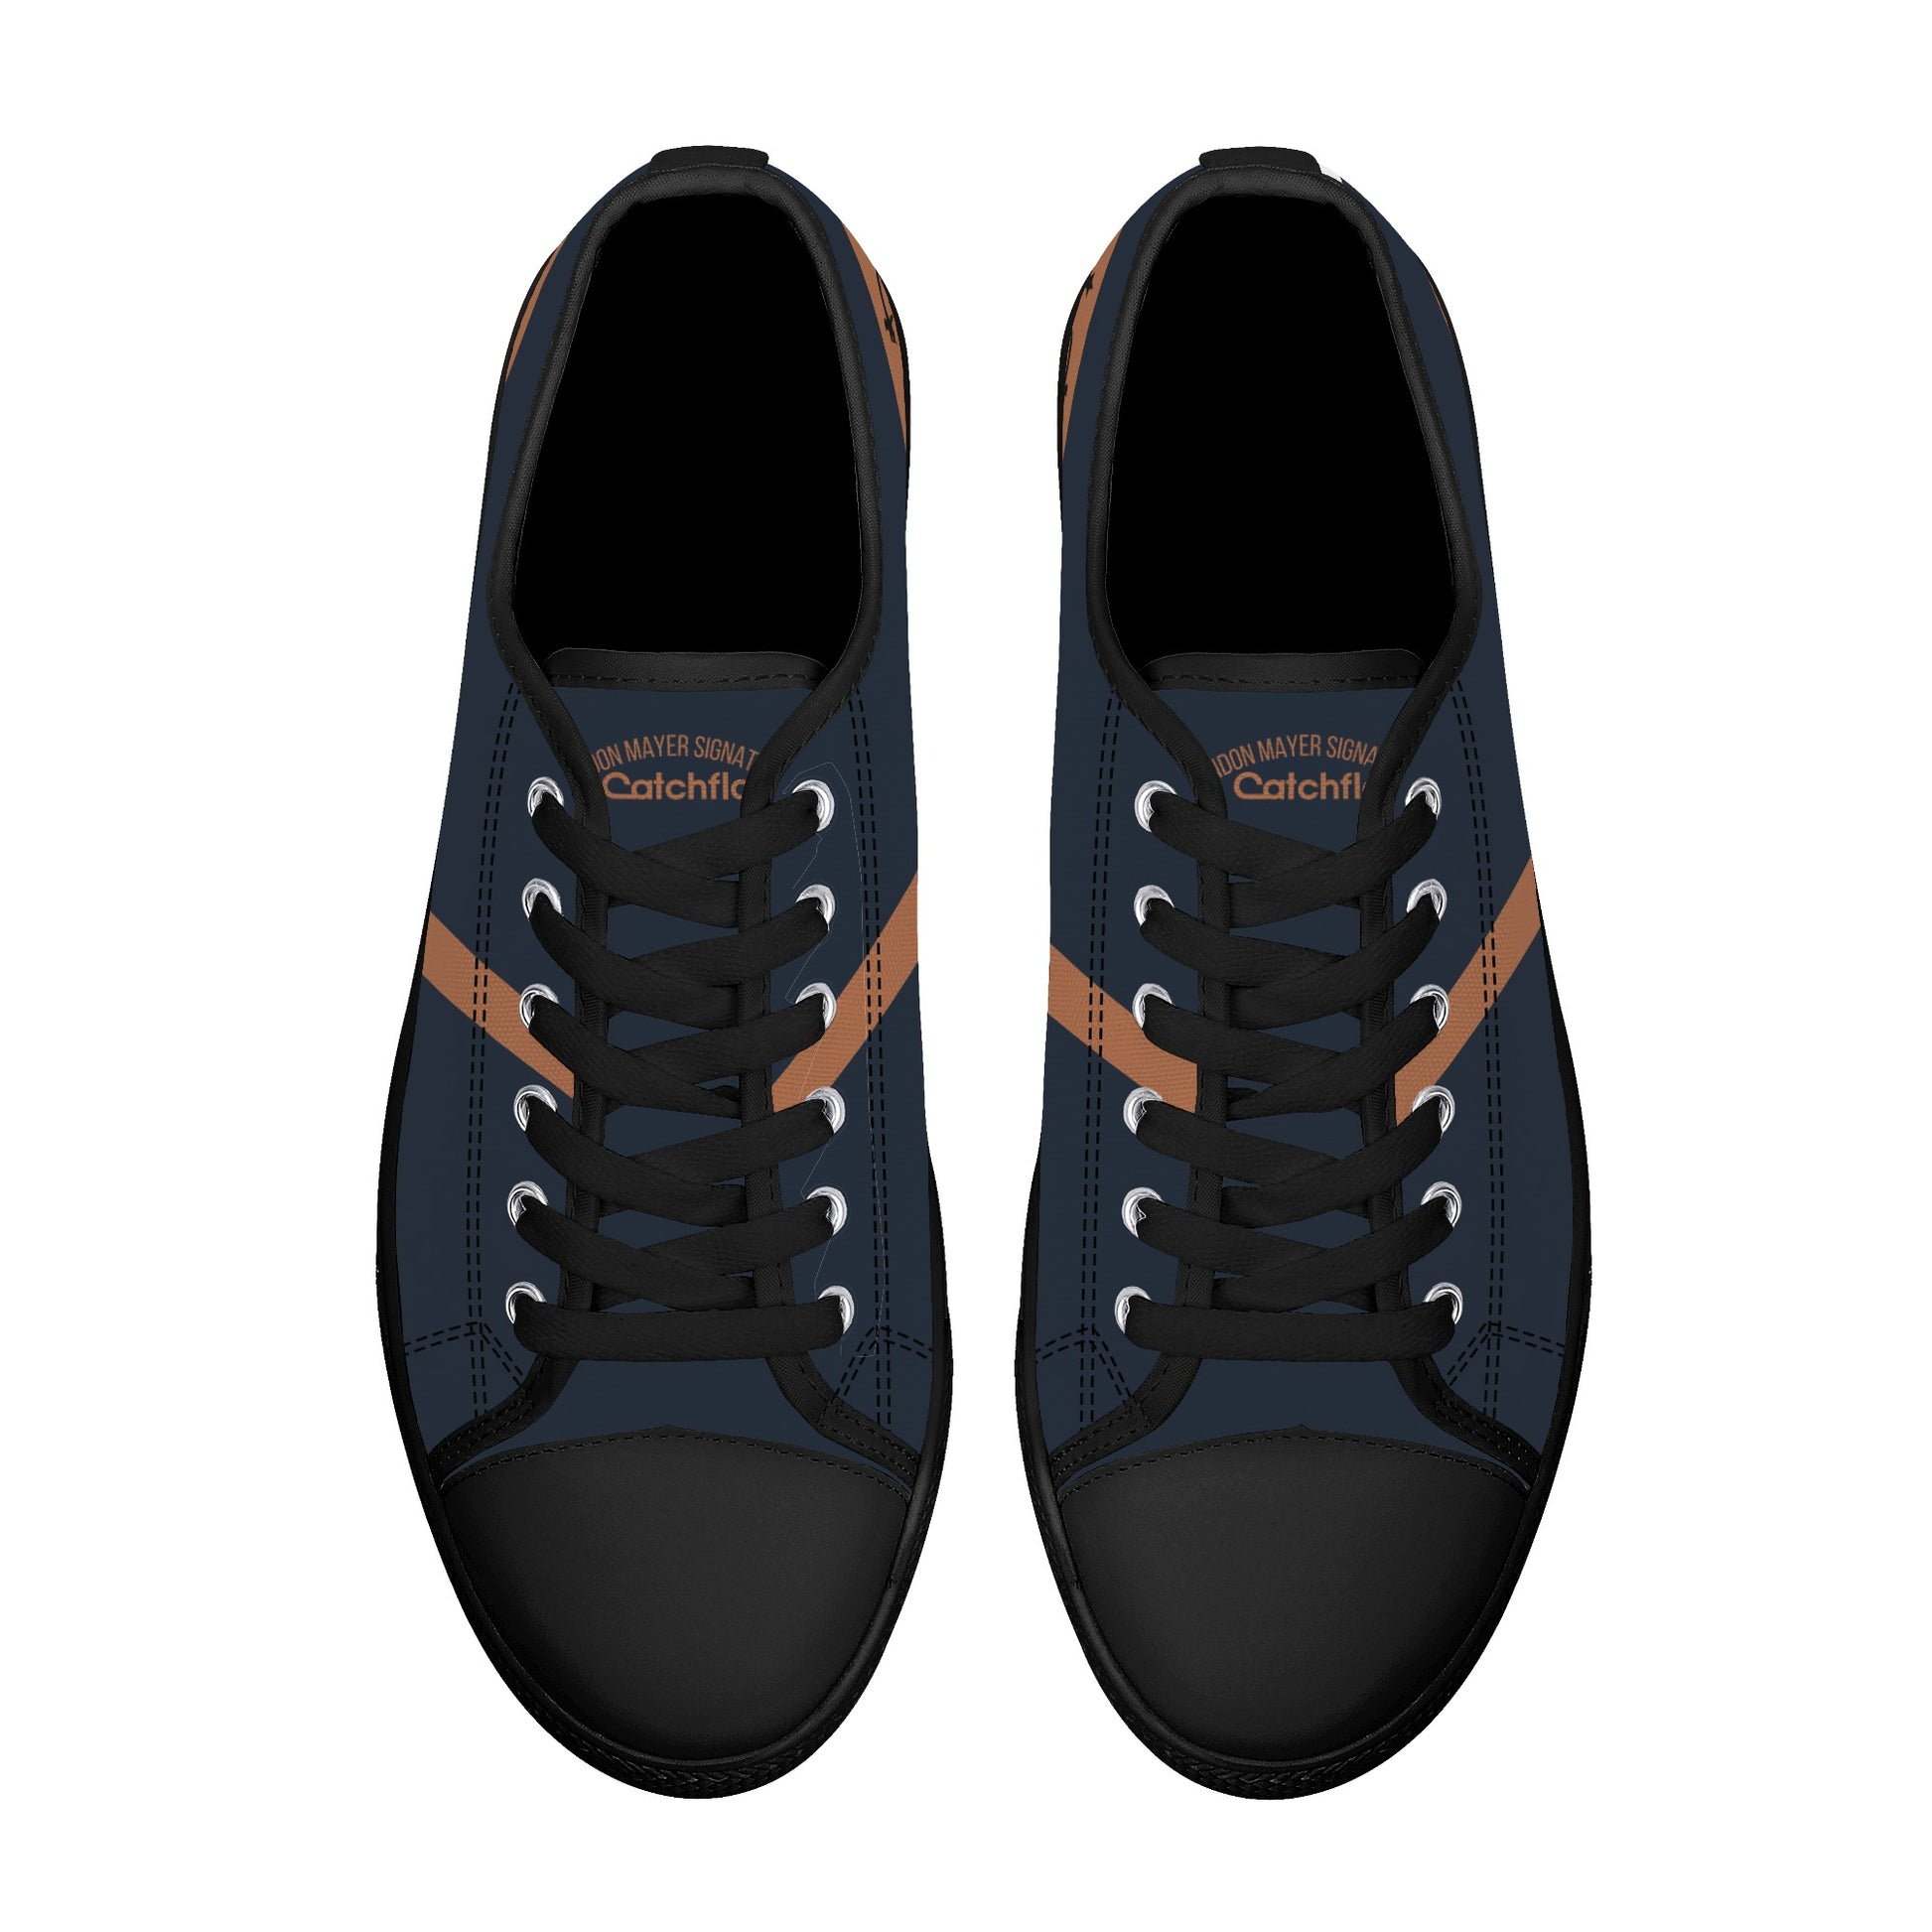 Catchflo Signature Mayer Landon + (navy) Sneaker